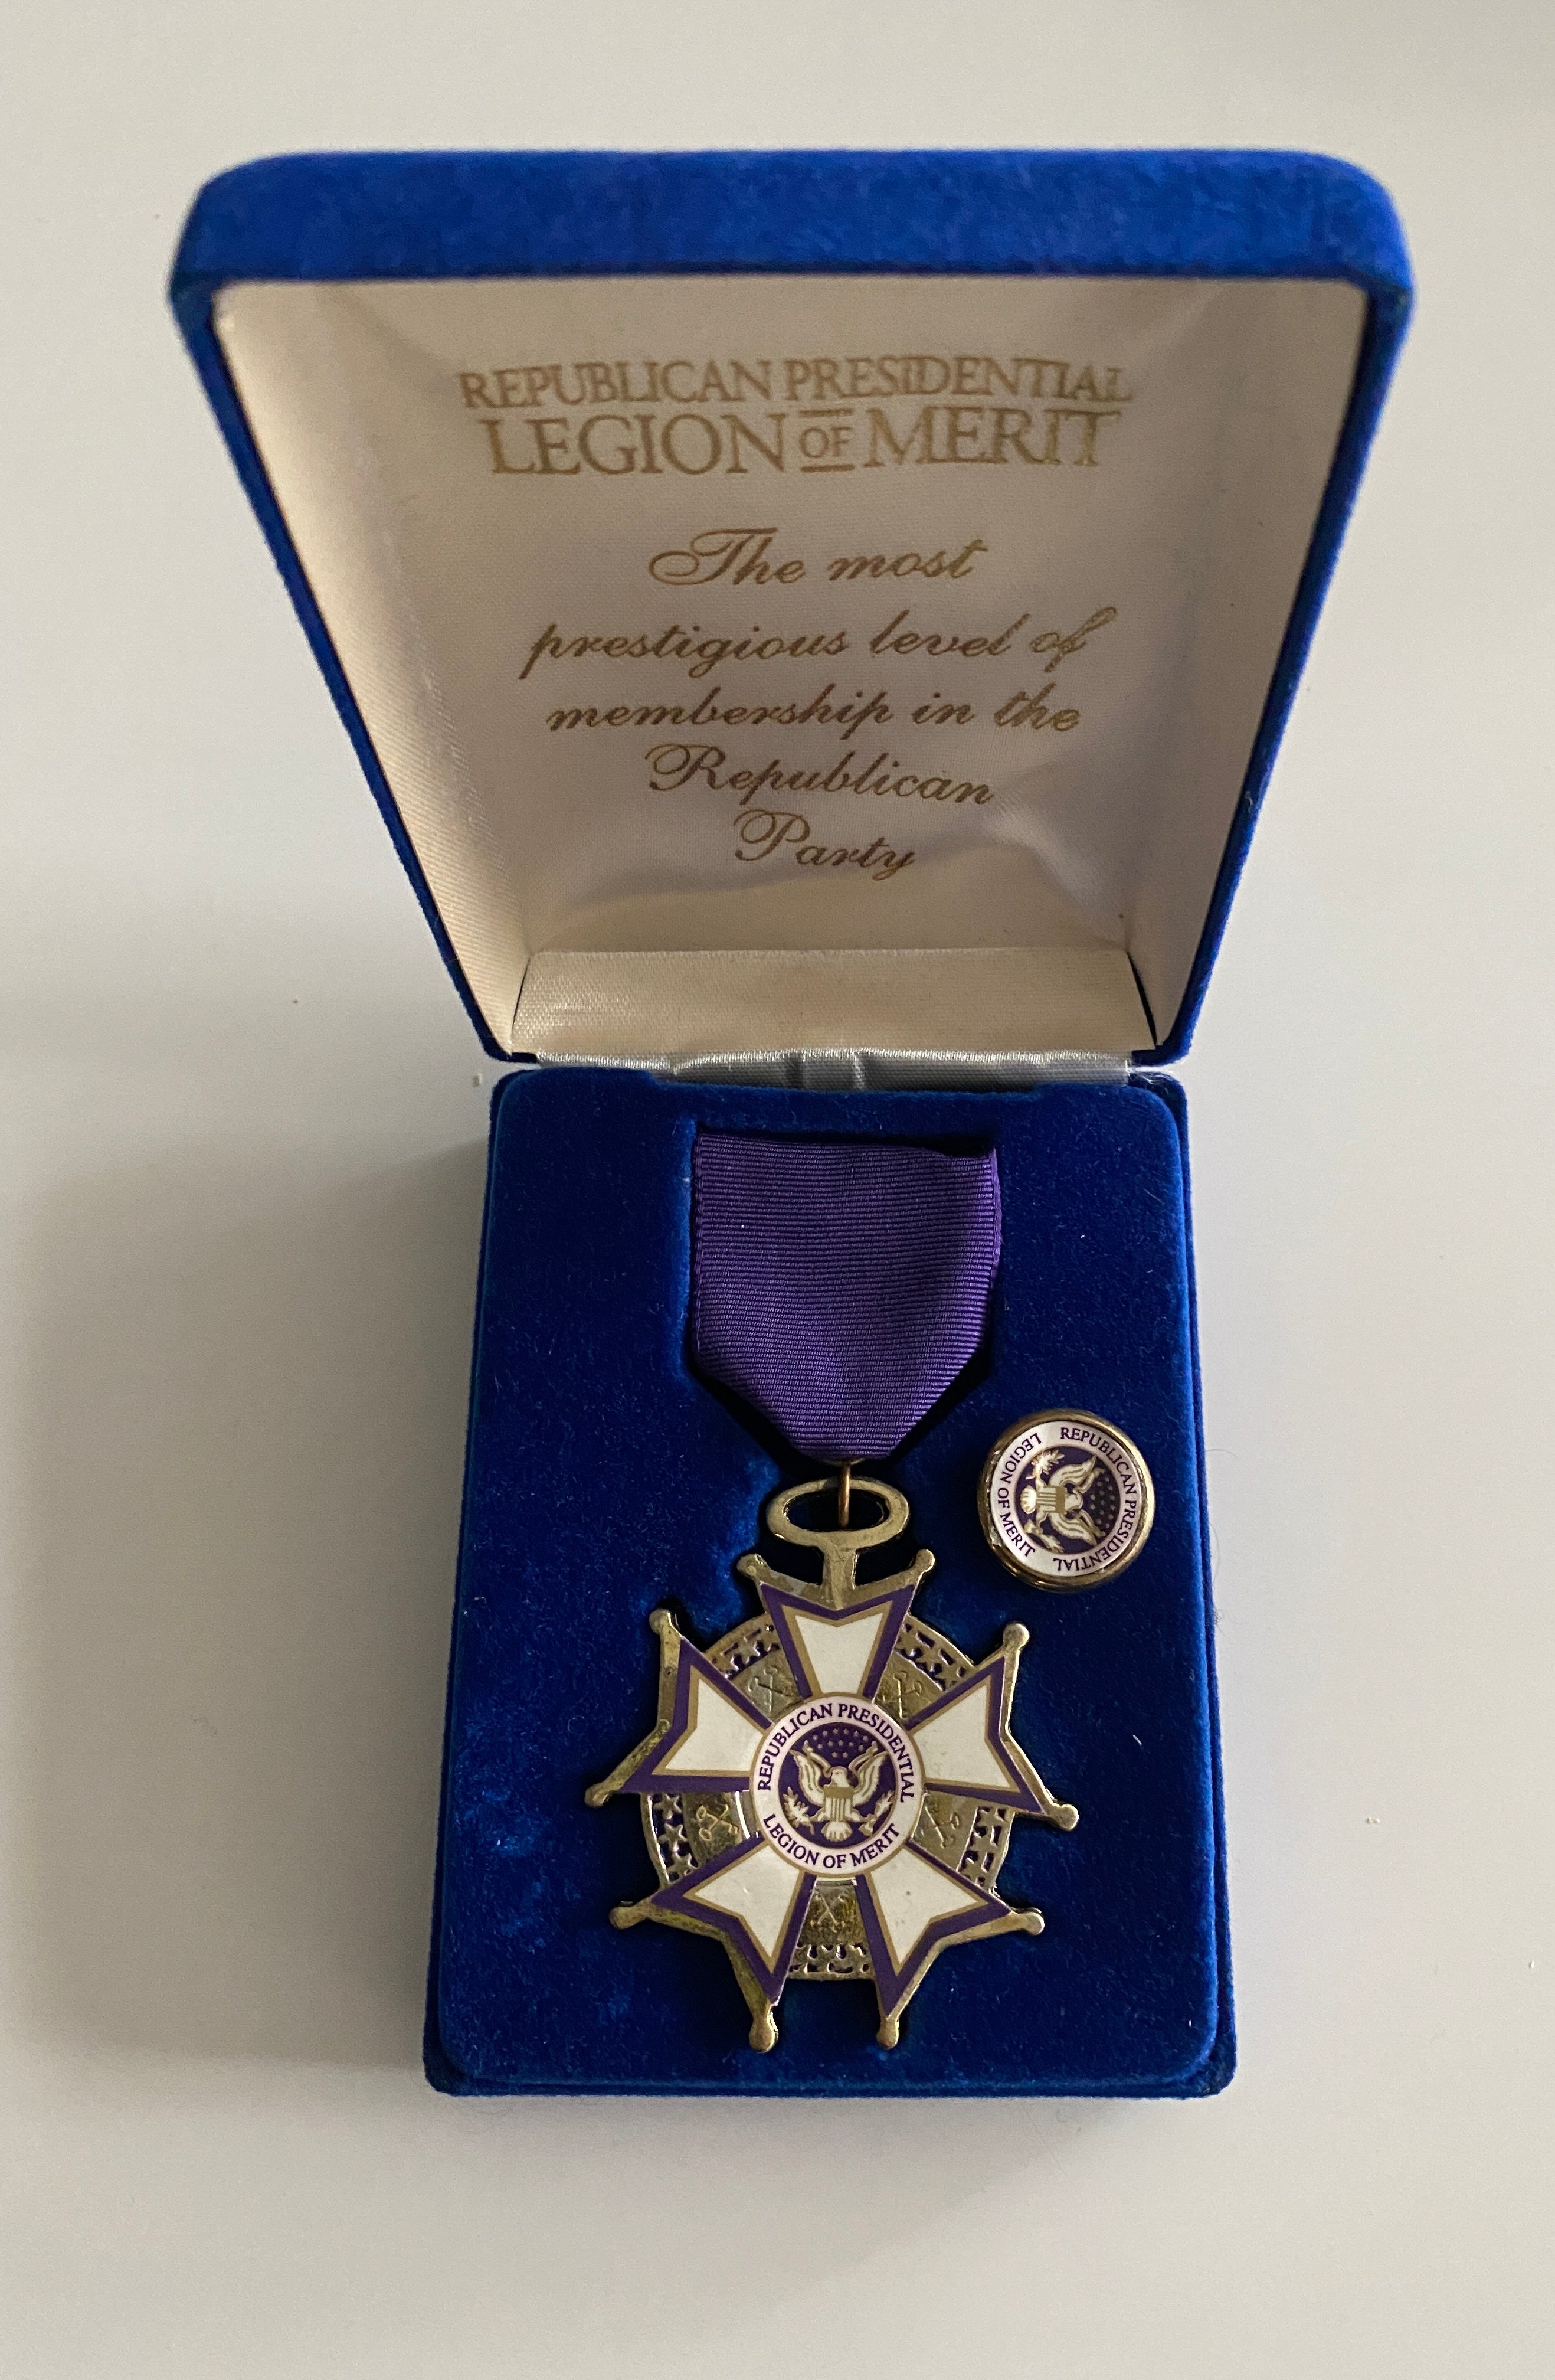 Republican Presidential Legion of Merit ribbon medal and lapel pin